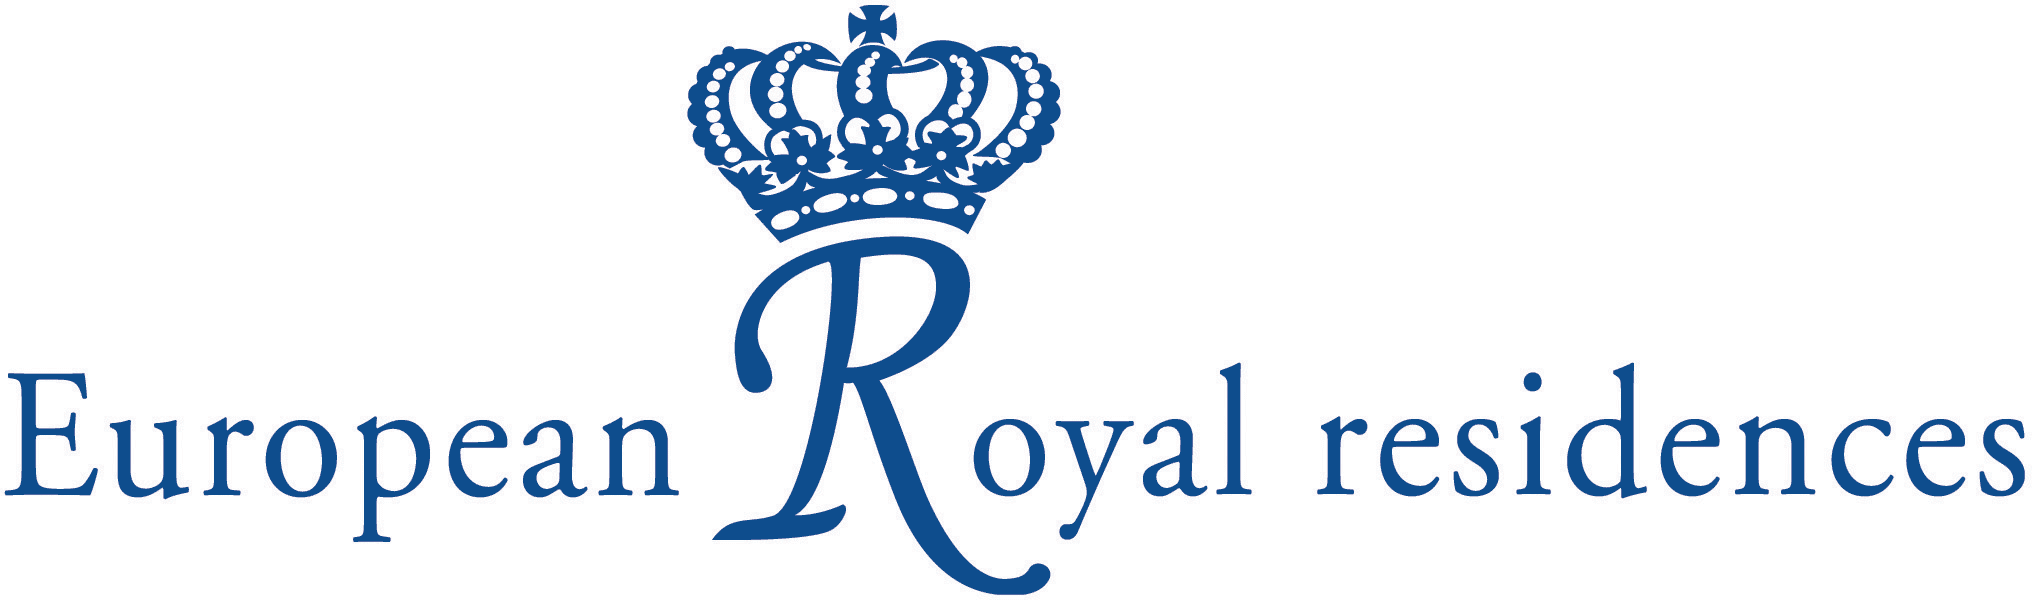 European Royal Residences